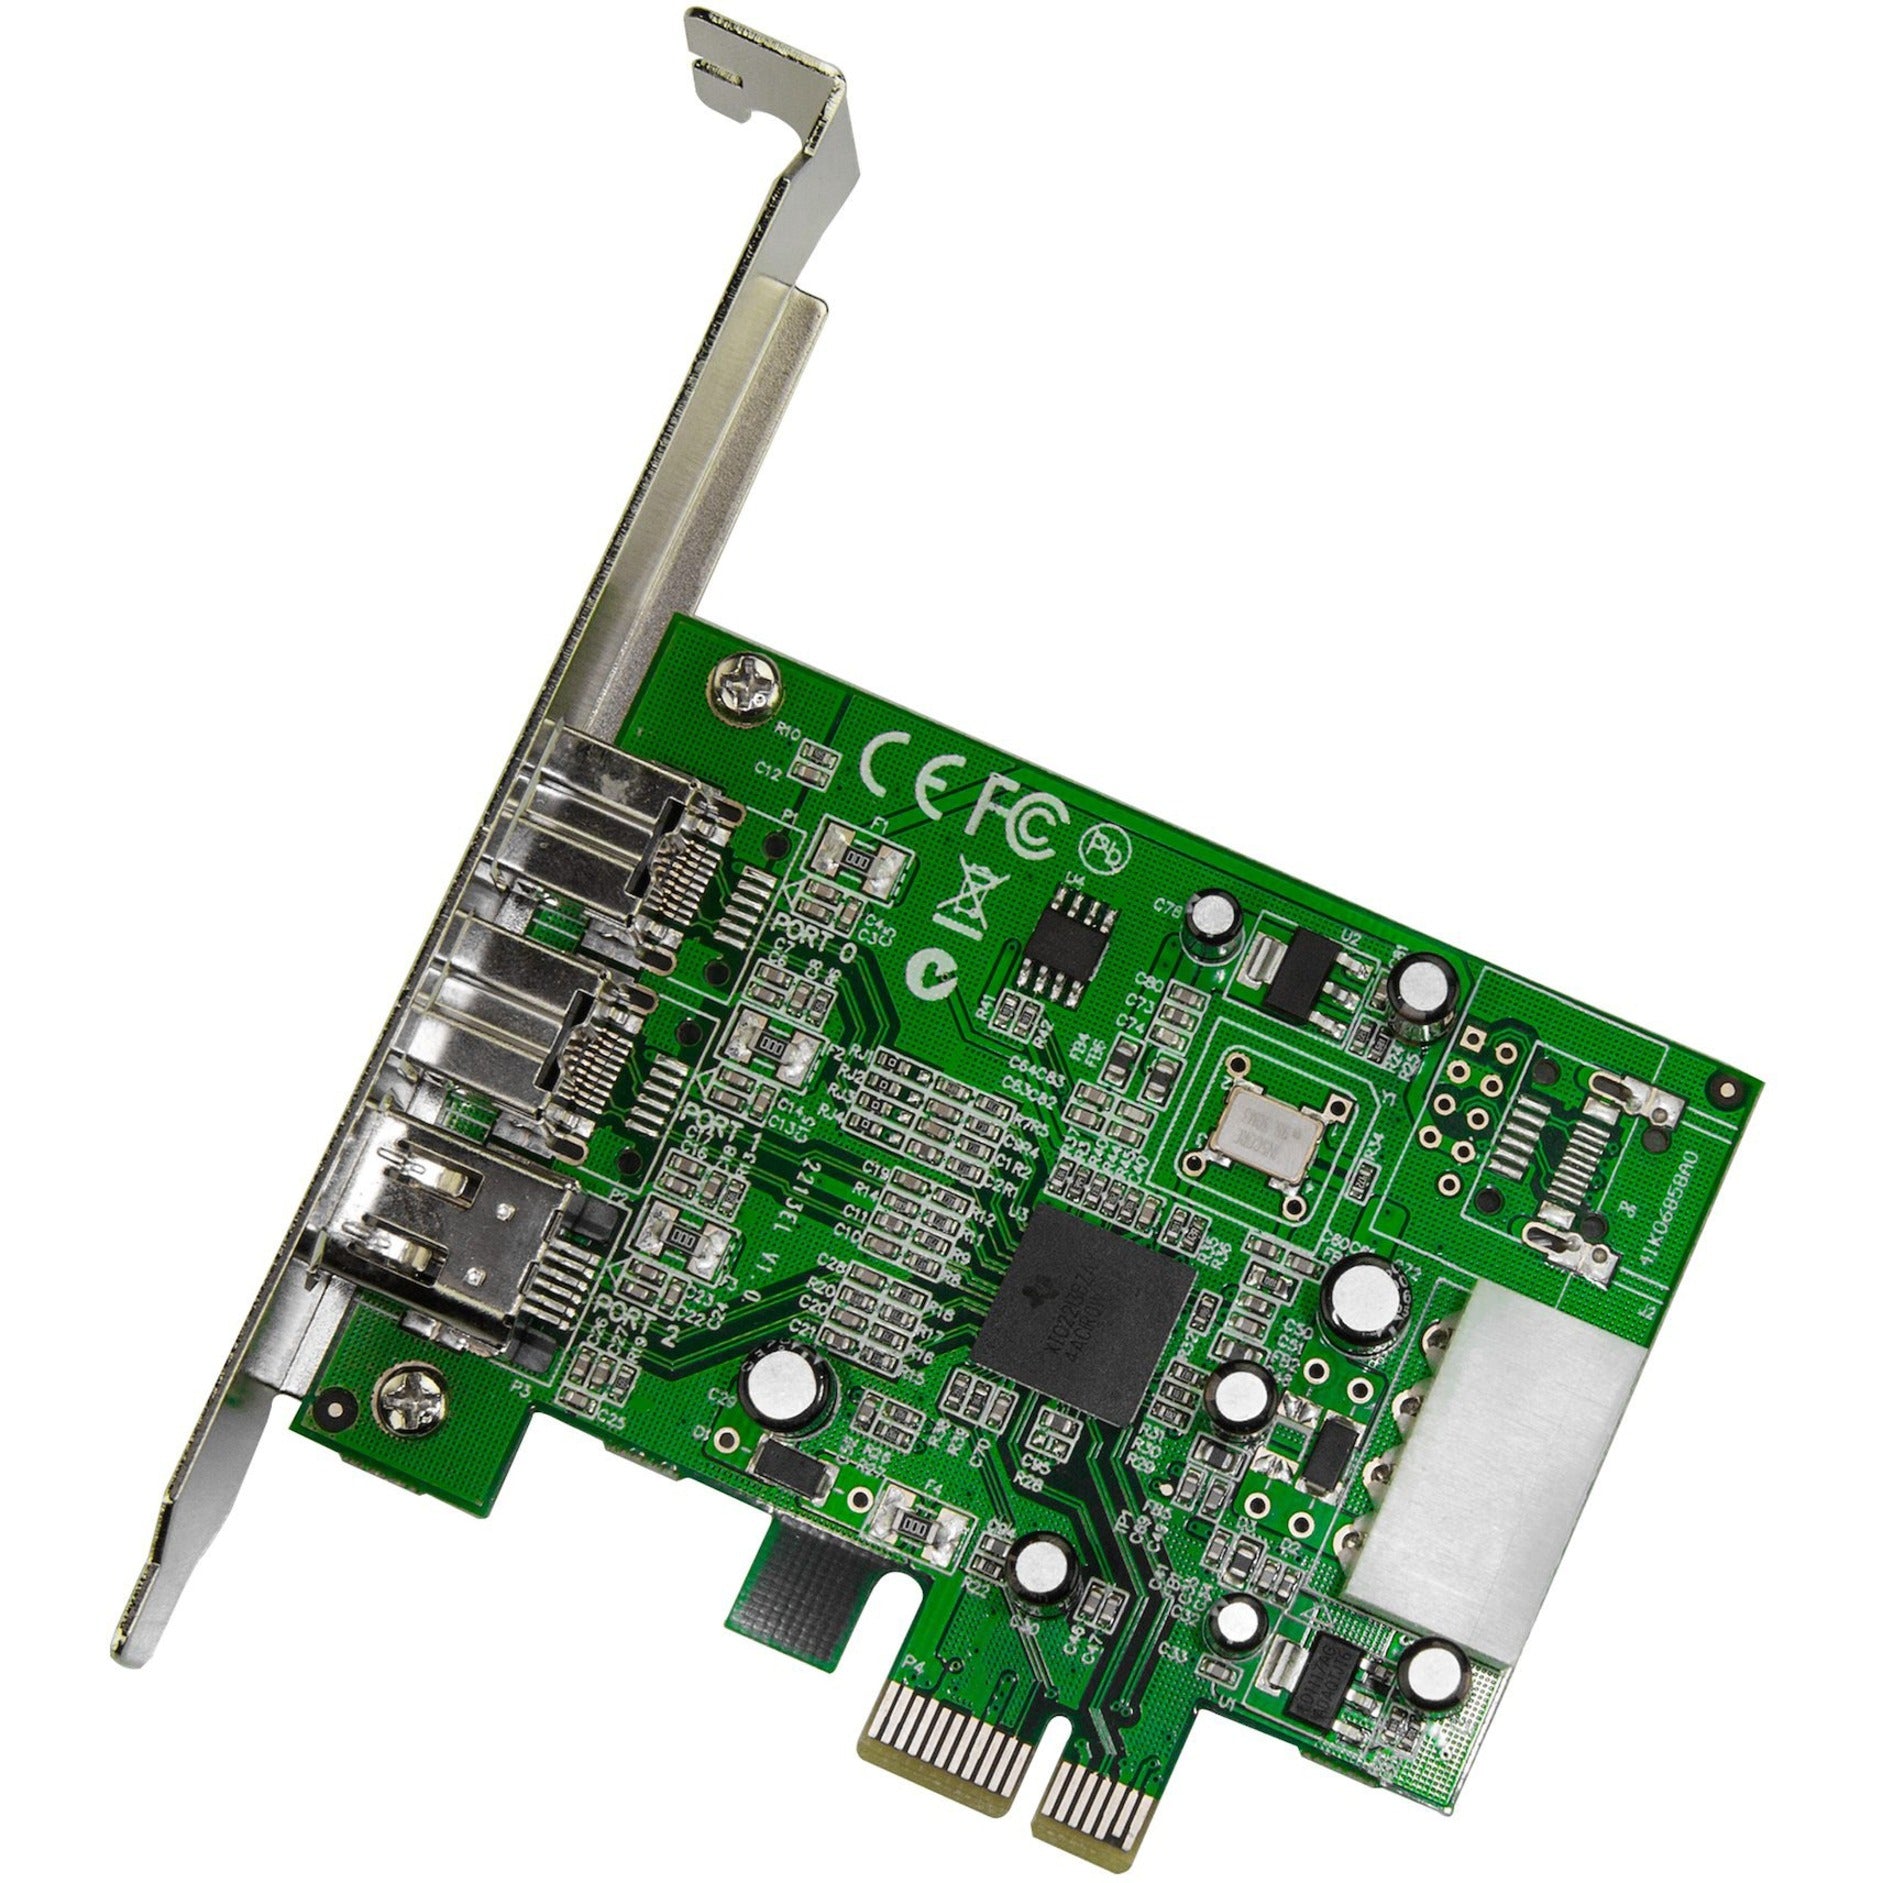 StarTech.com PEX1394B3 3 Port 2b 1a 1394 PCI Express FireWire Card Adapter High-Speed Data Transfer and Easy Connectivity